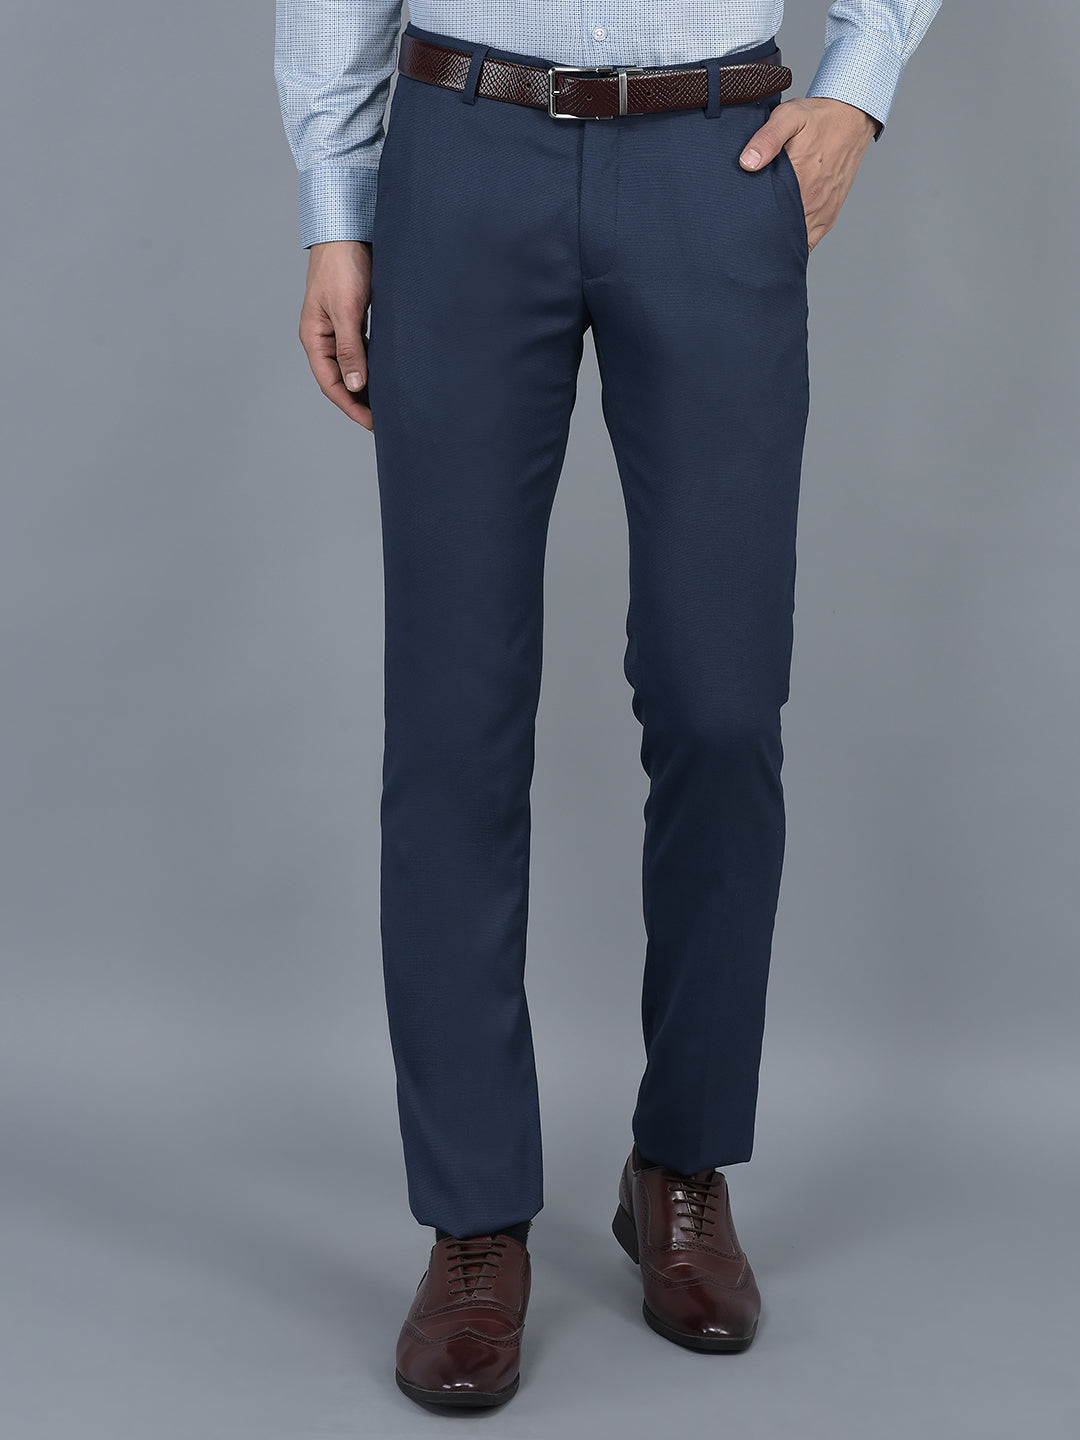 Buy Navy Formal Trousers Online in India at Best Price  Westside